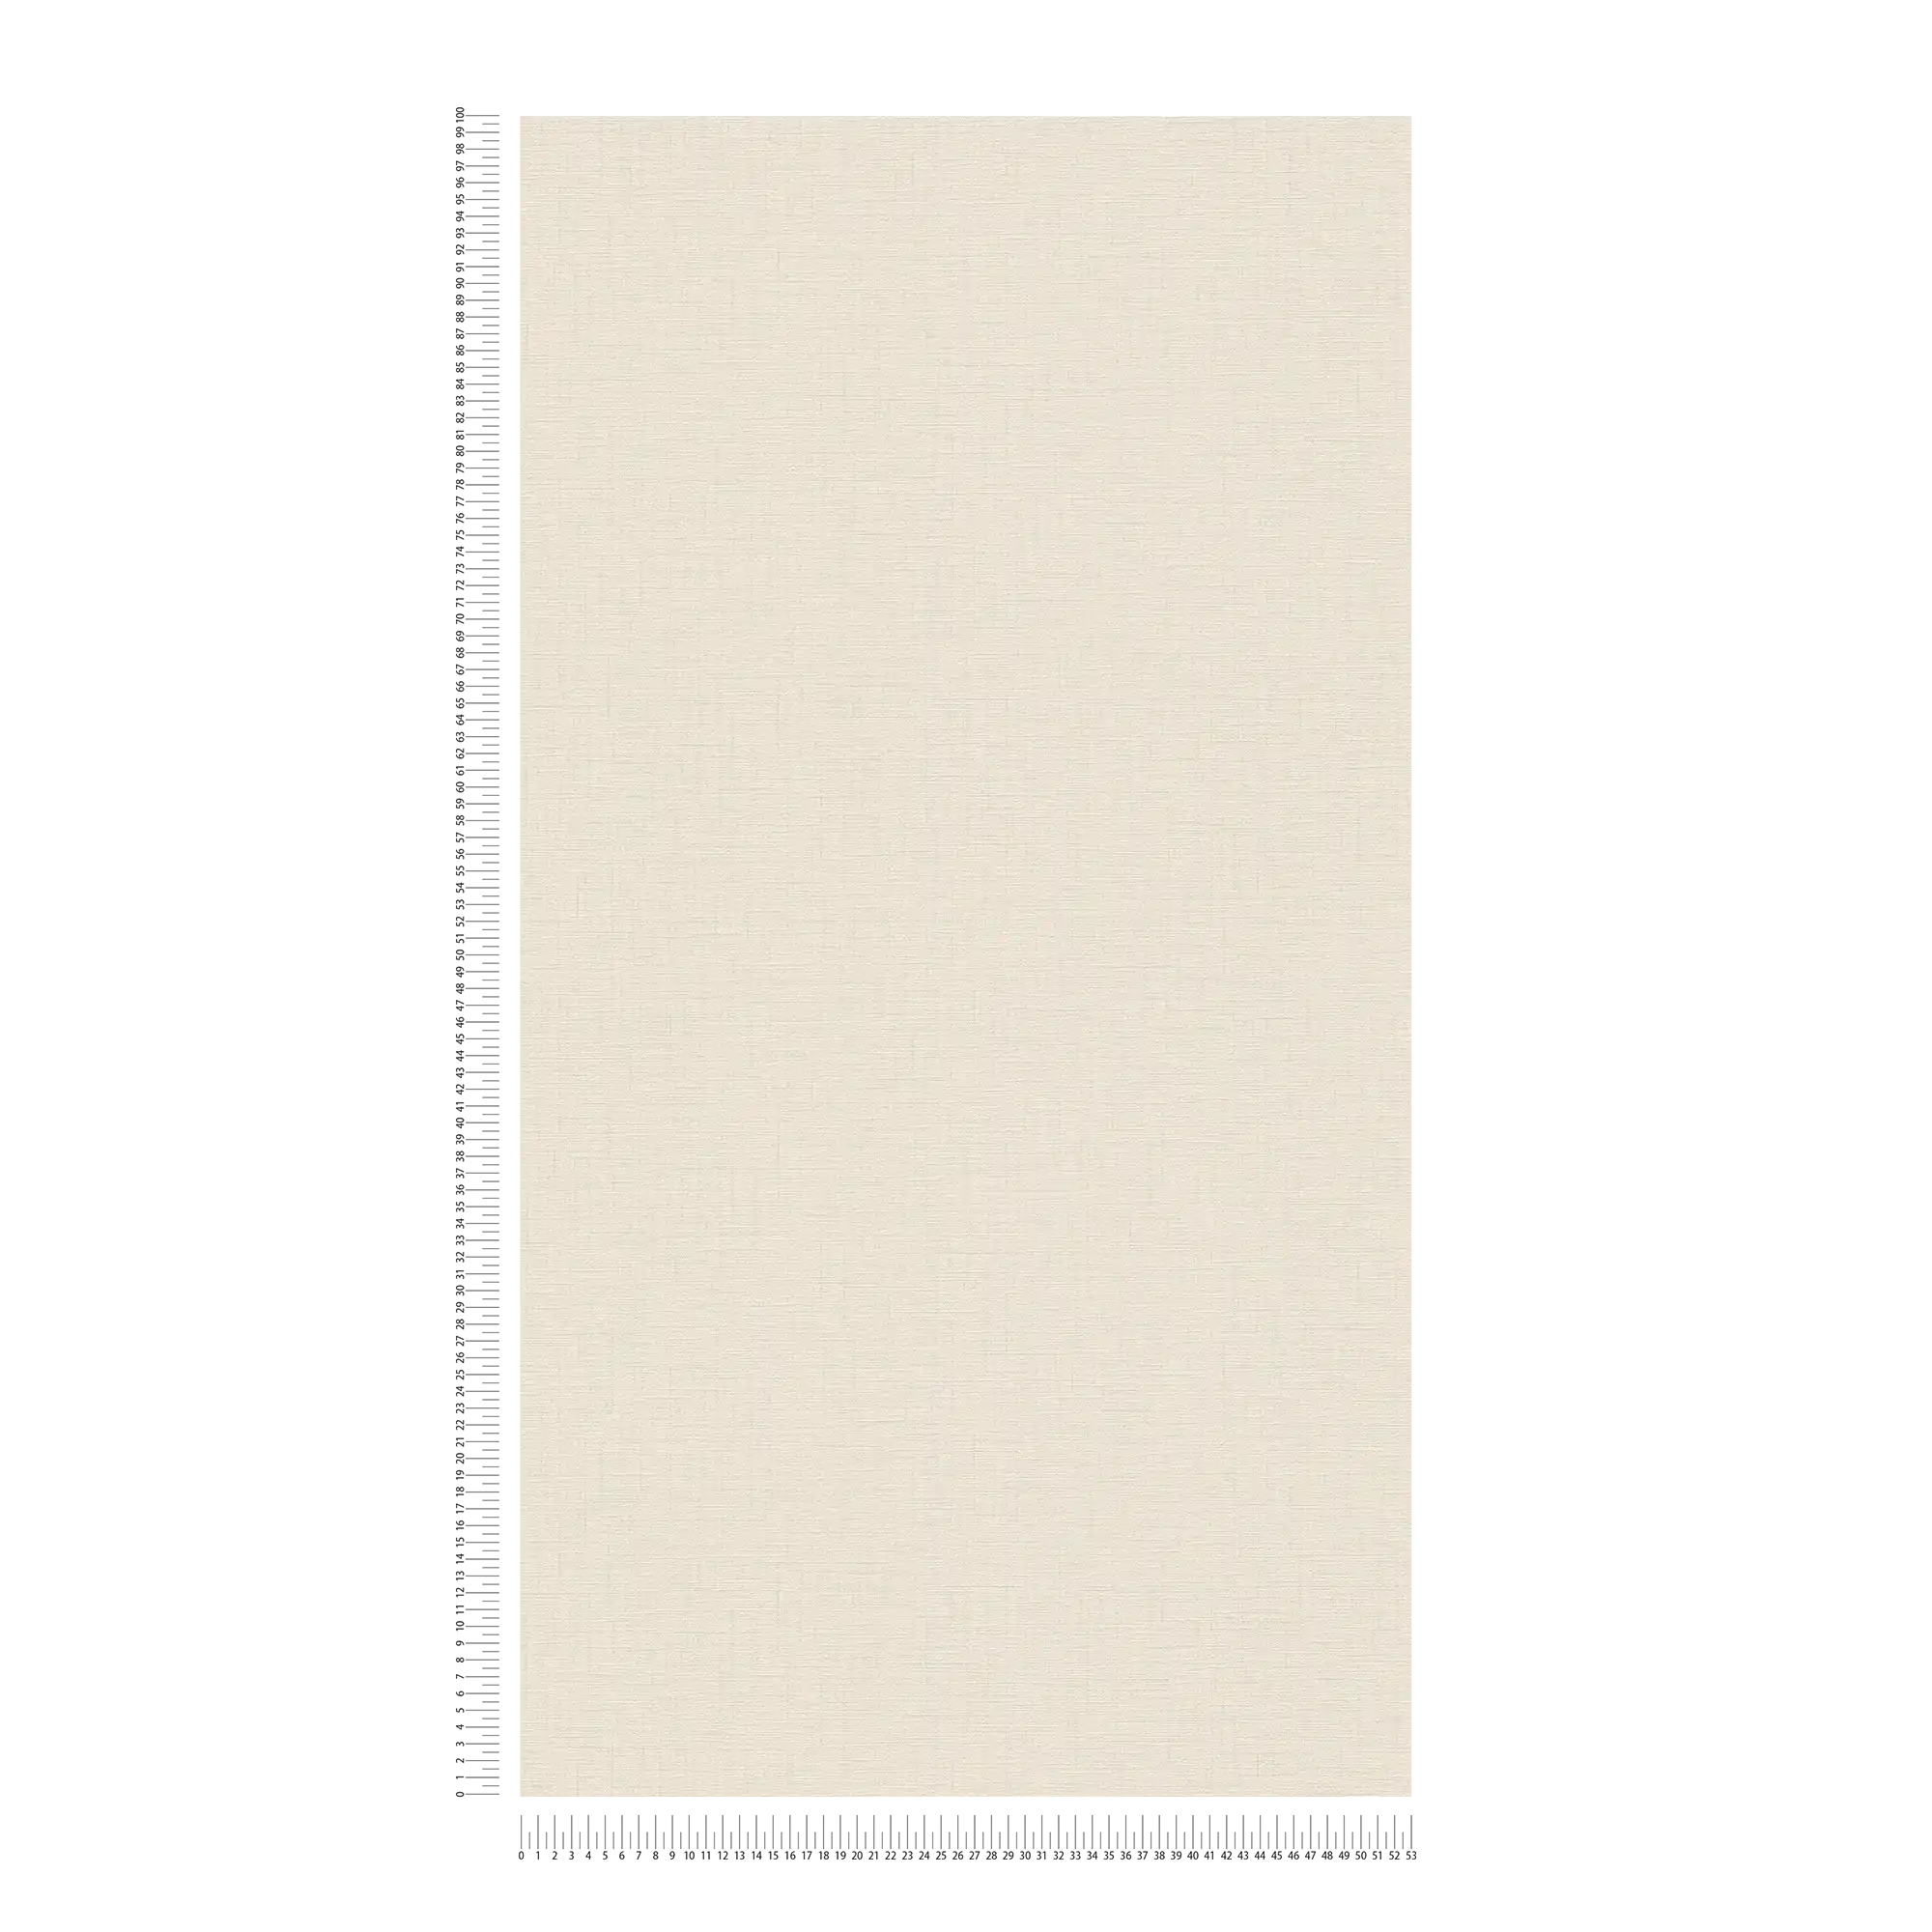             Papel pintado beige claro moteado con estructura de lino
        